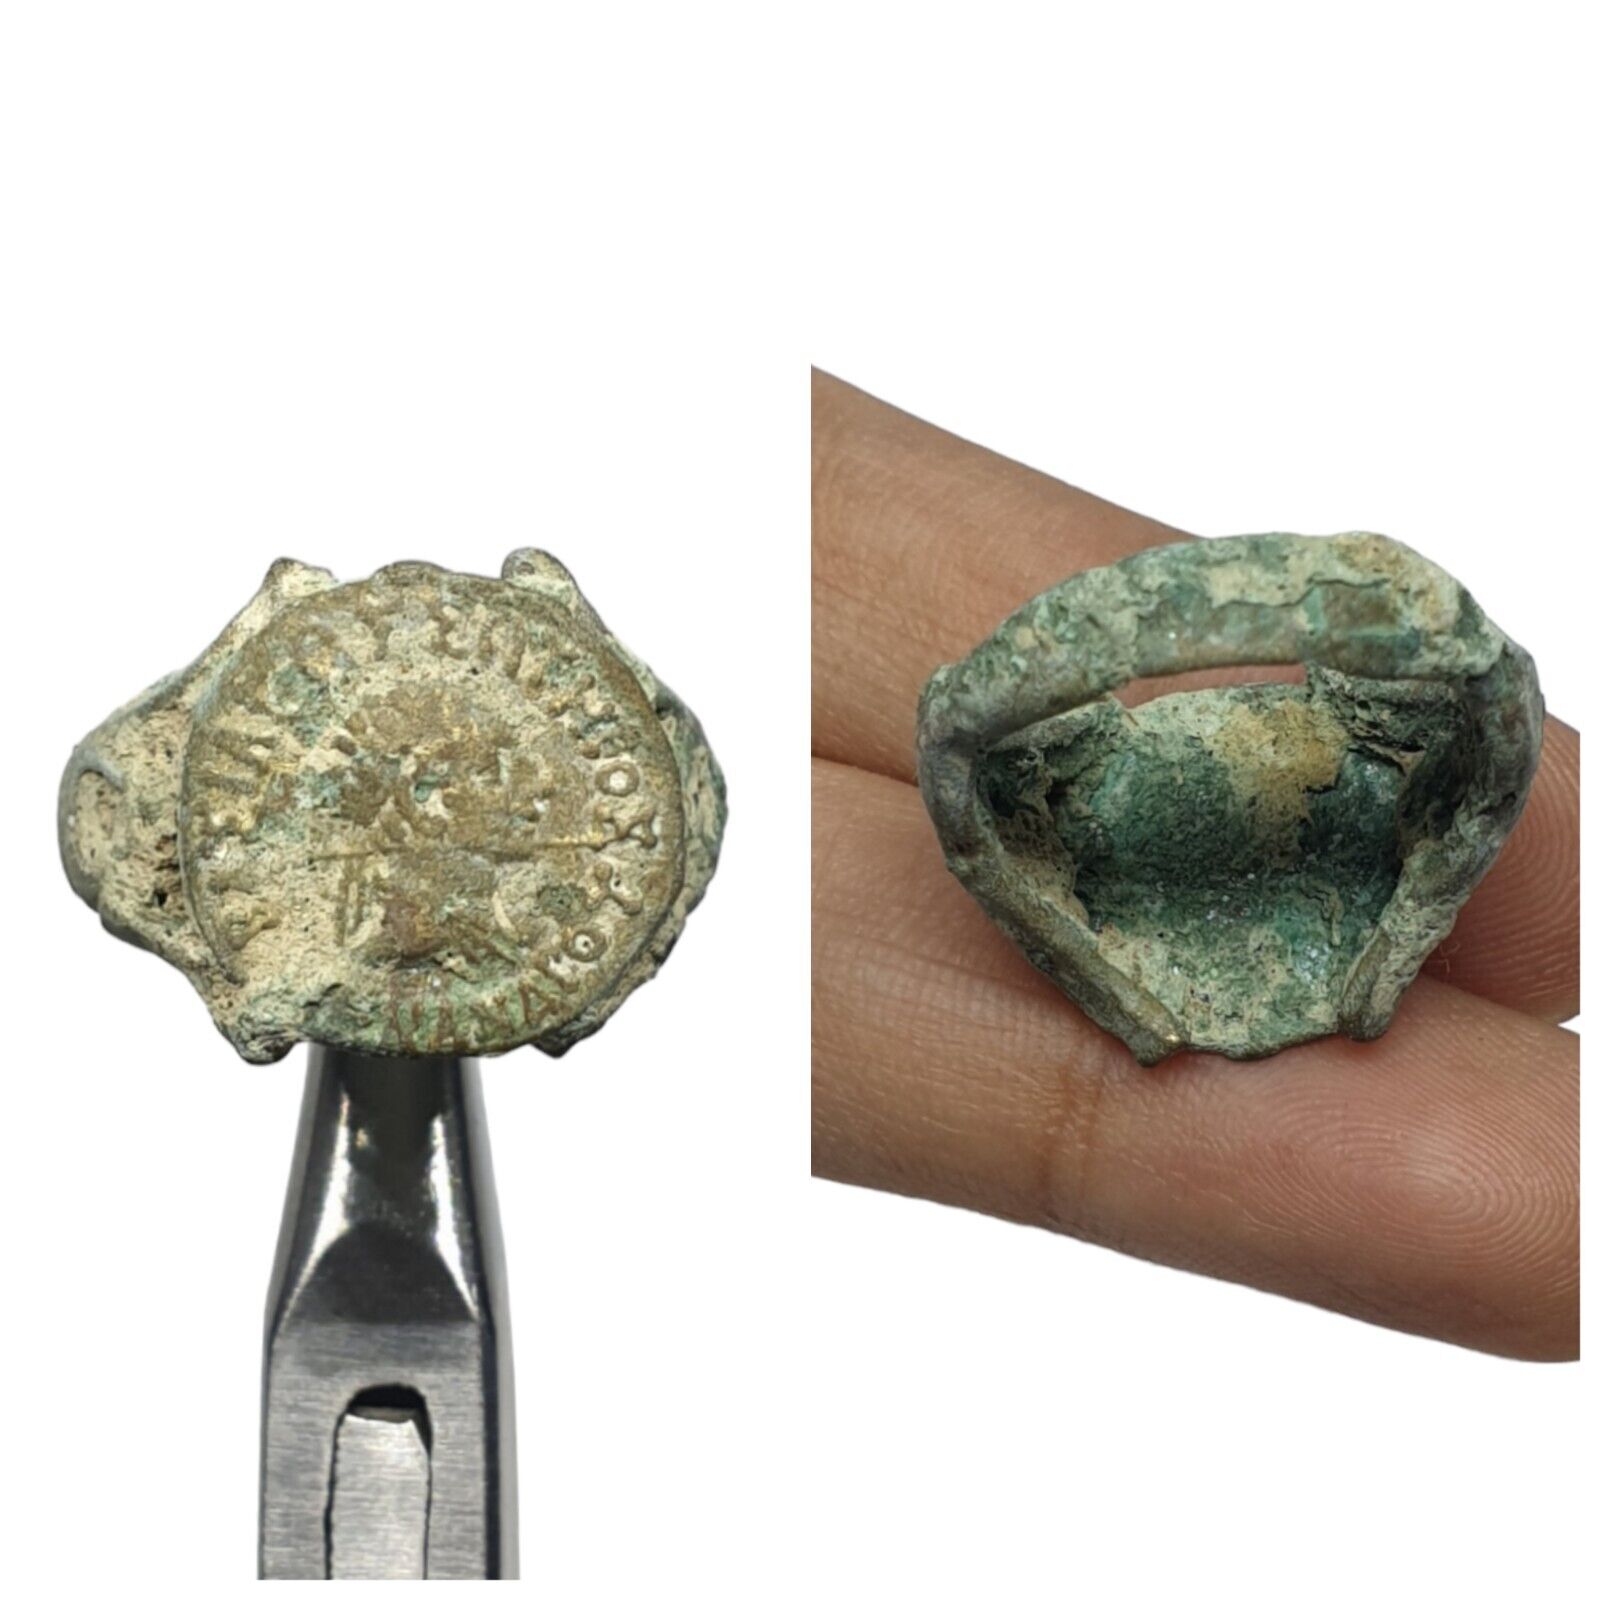 Rare Antique Bronze Roman Seal Signet Intaglio Engraved Round Ring Size 6.25US